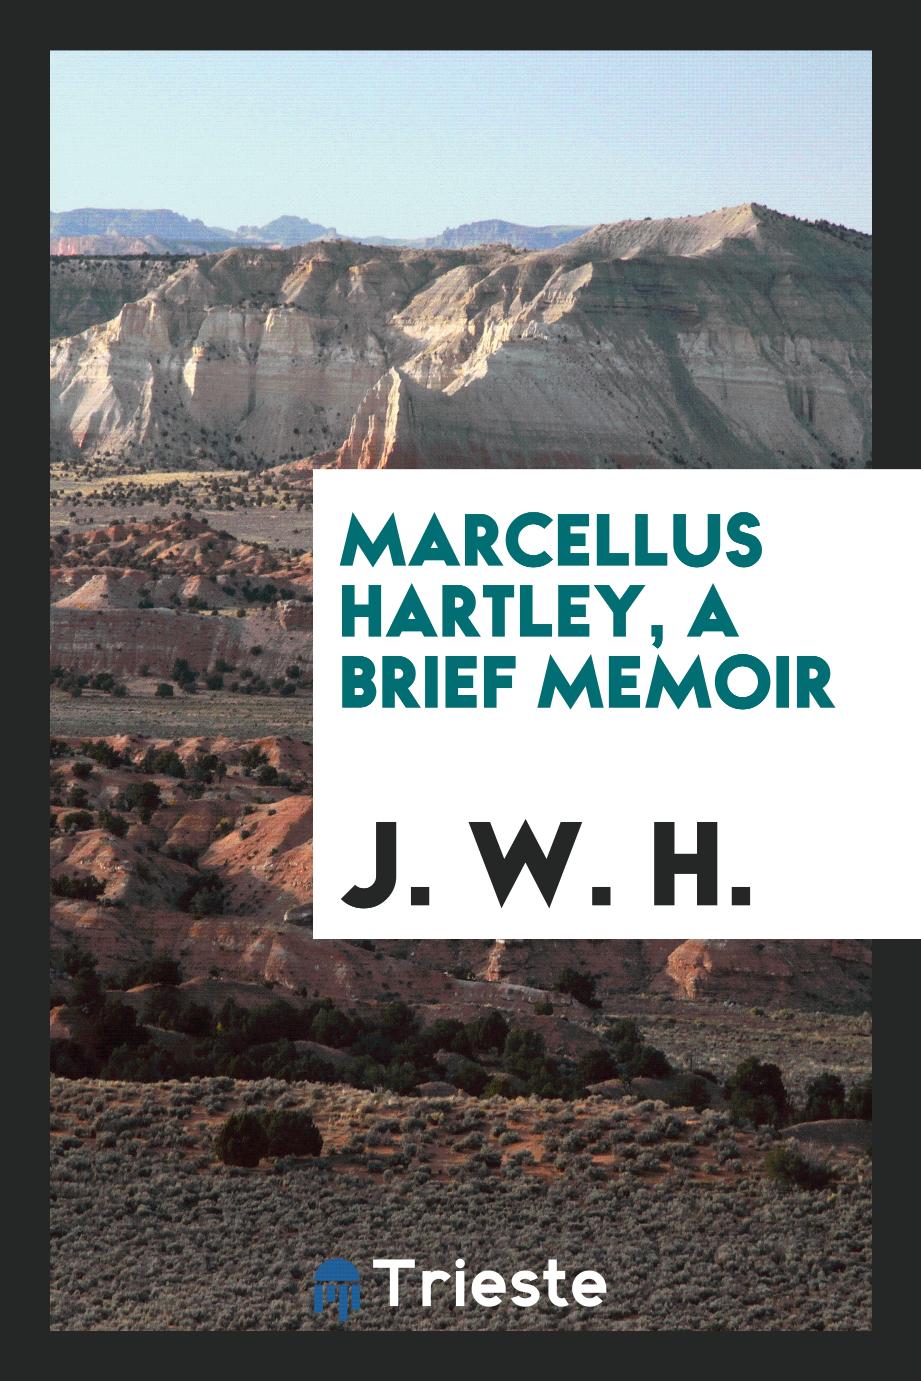 Marcellus Hartley, a brief memoir